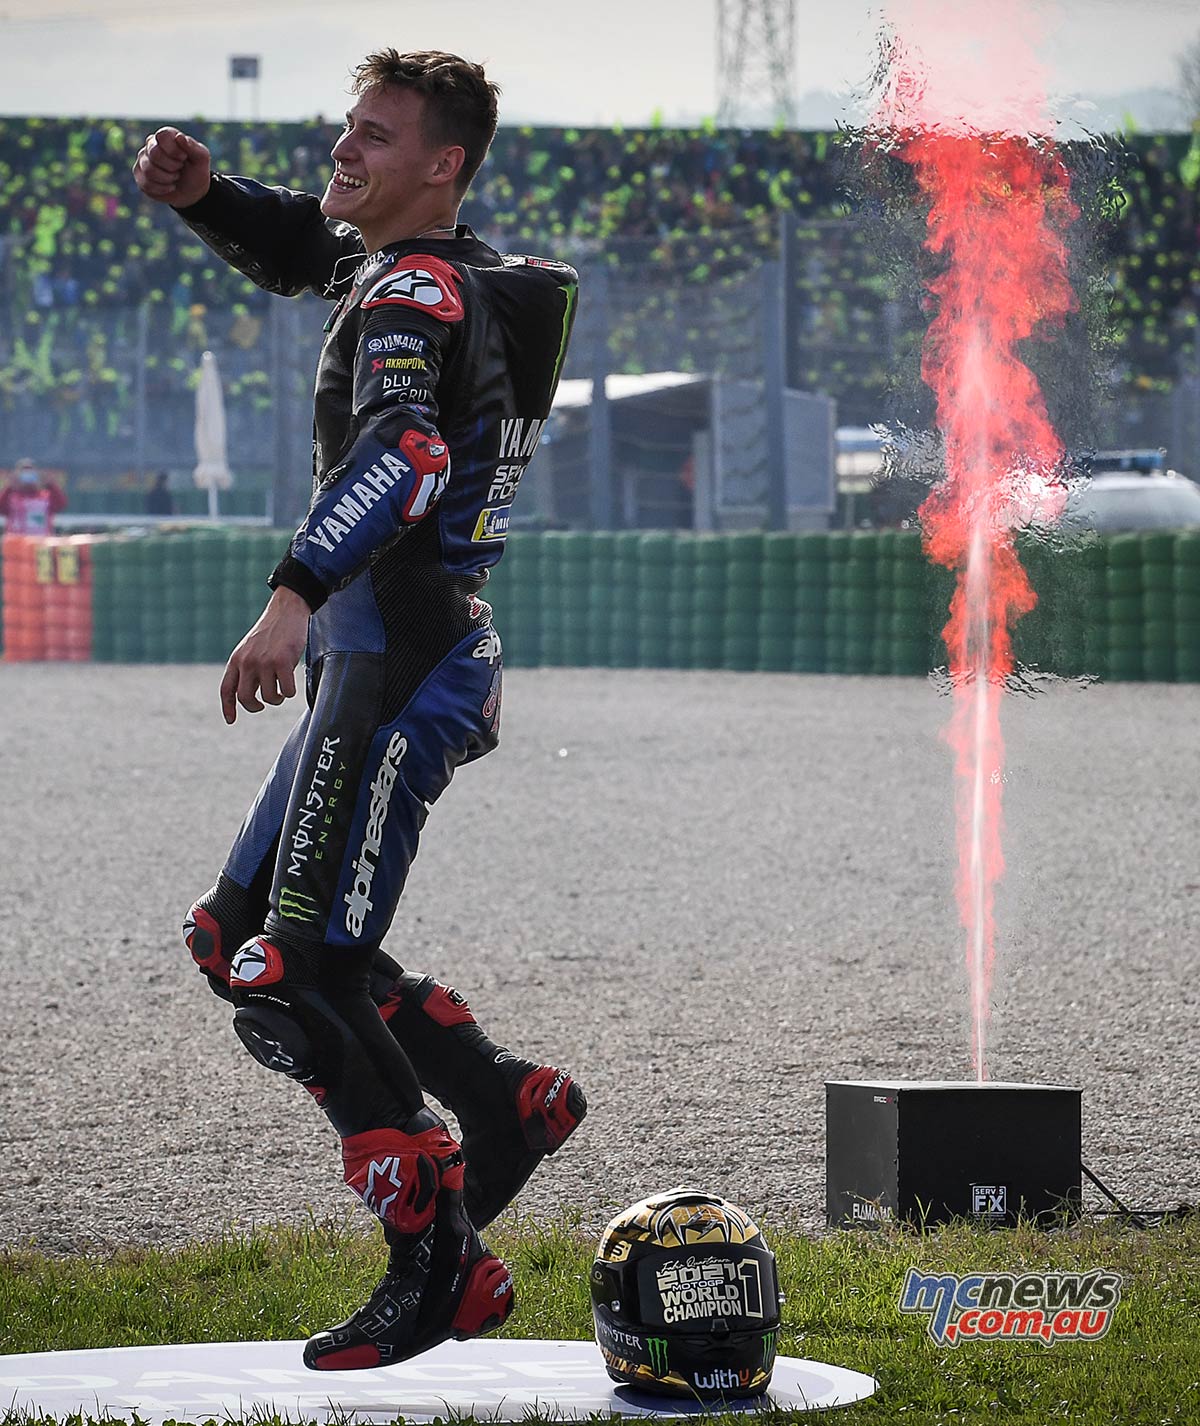 Fabio Quartararo wins the 2021 Doha Grand Prix! : r/motogp